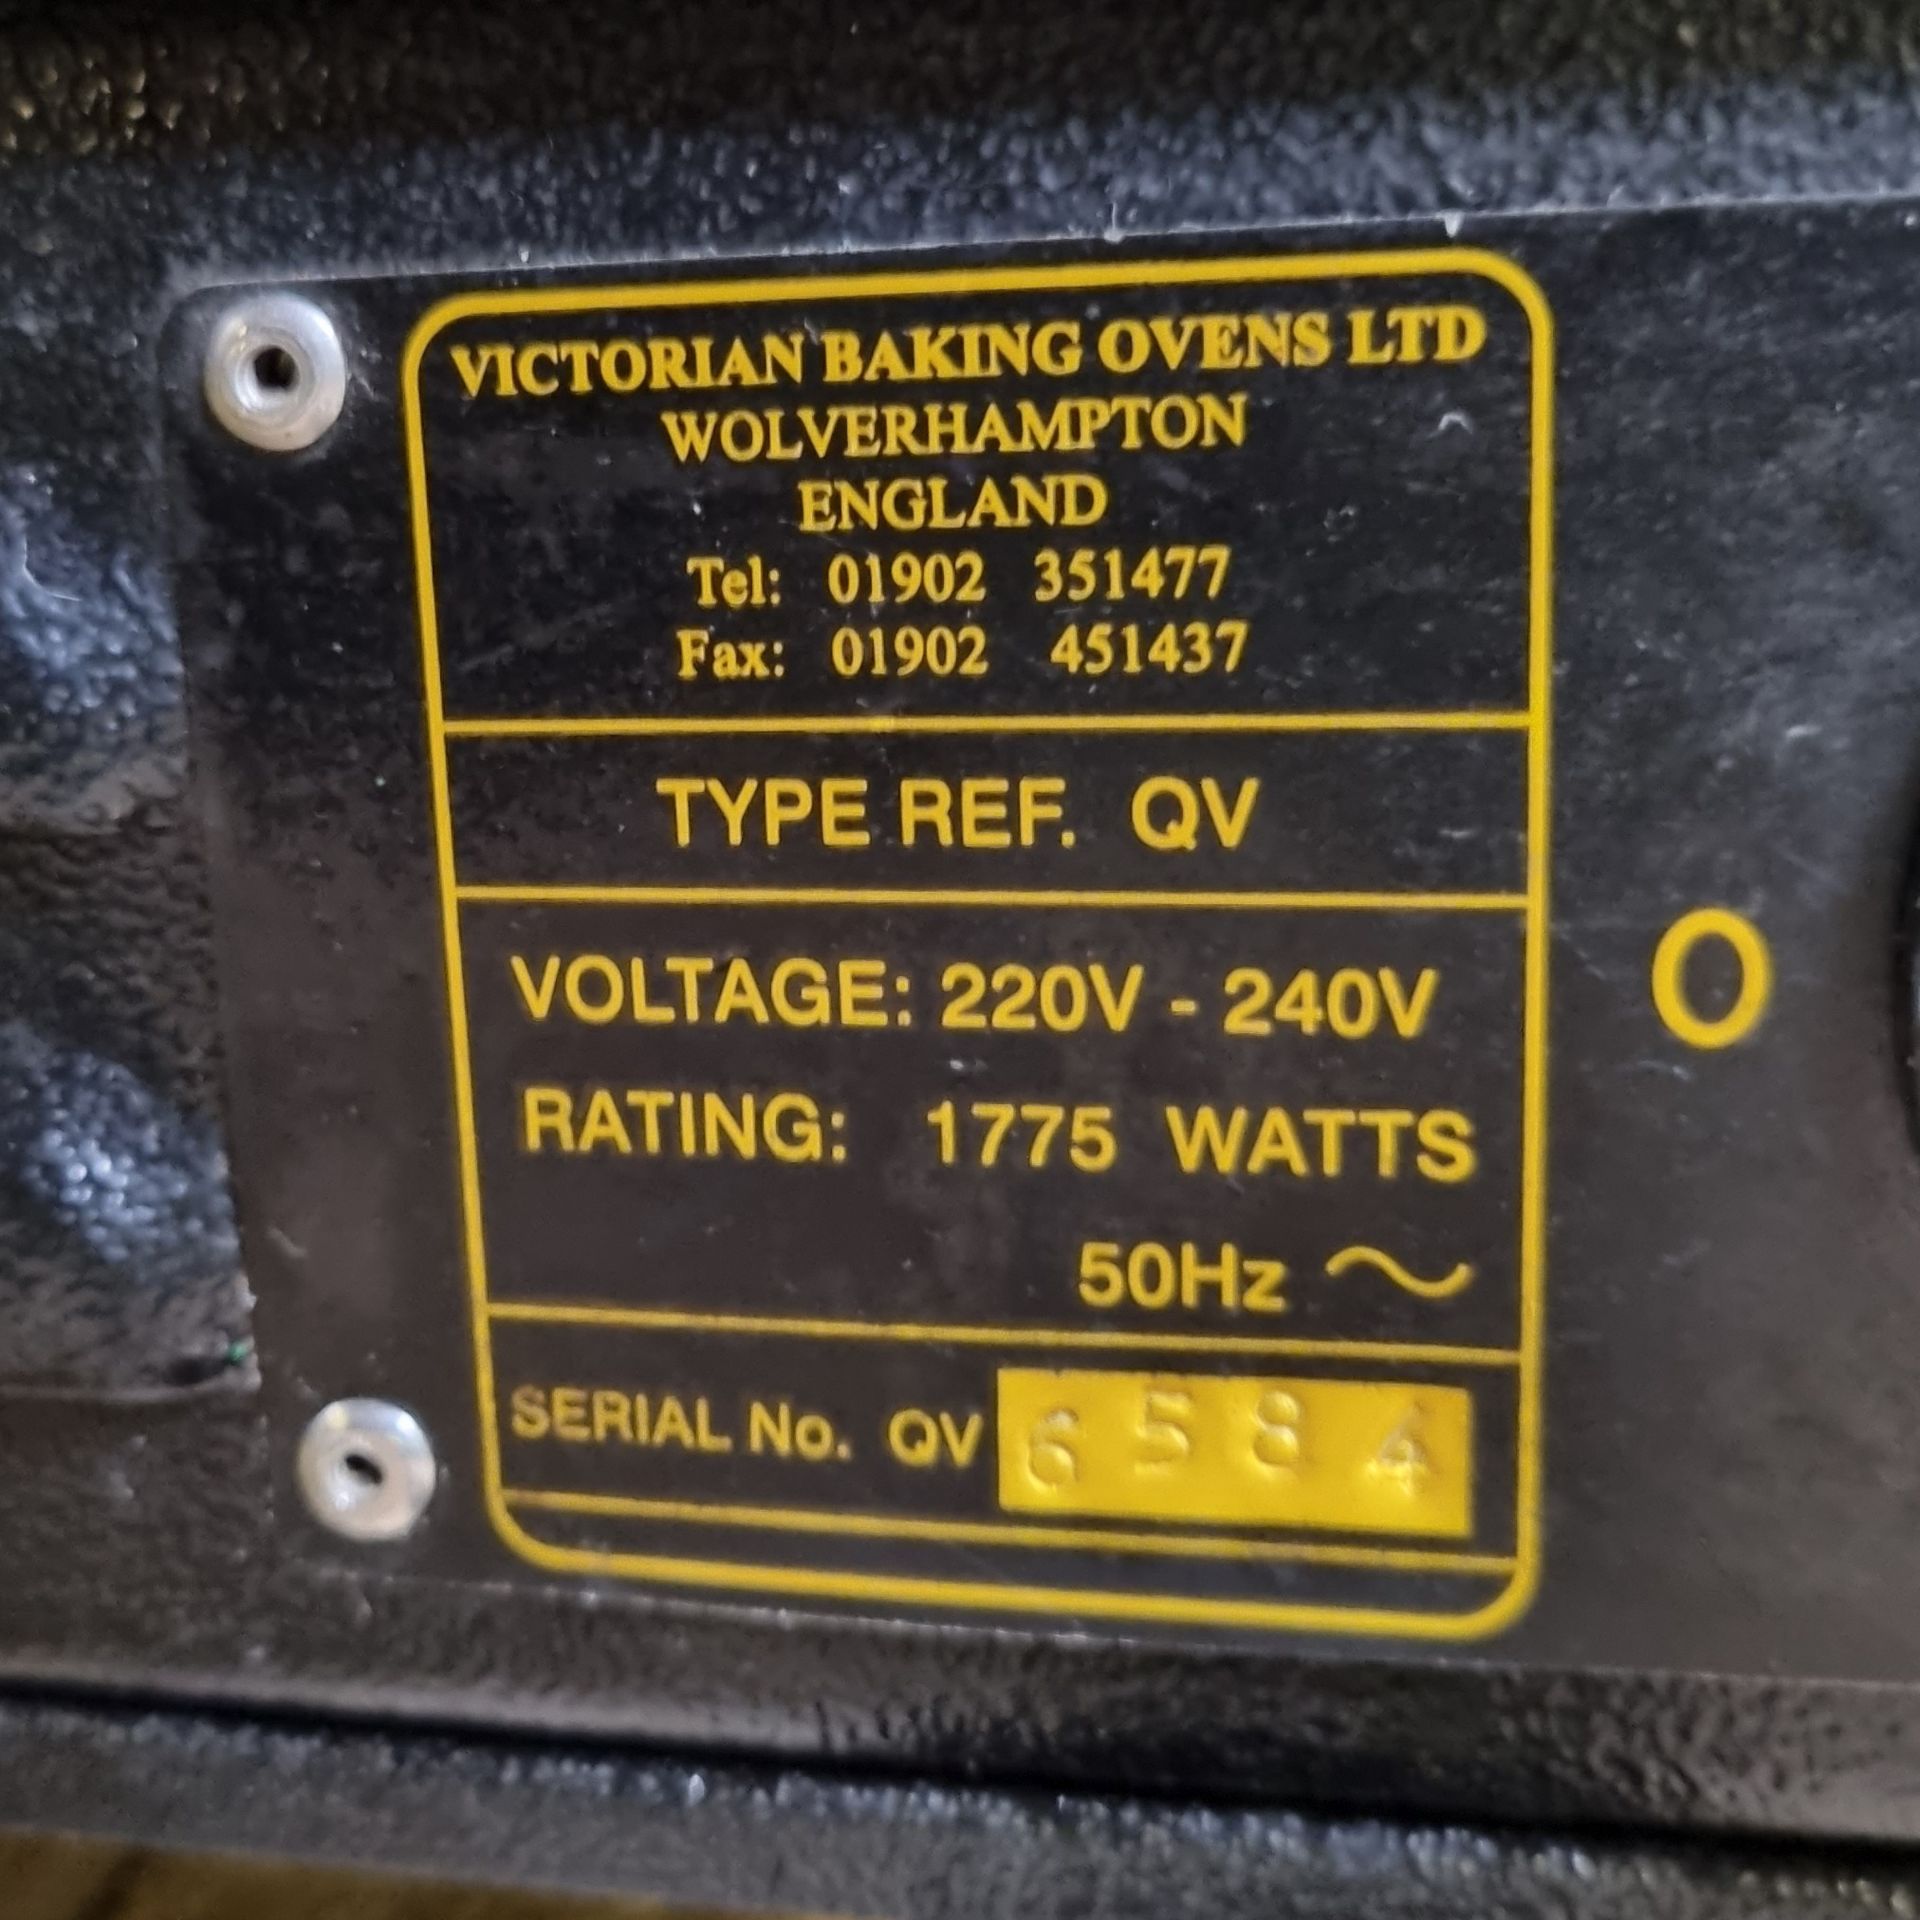 Victorian Baking Ovens QV potato oven - black - W 450 x D 500 x H 750mm - Image 4 of 5